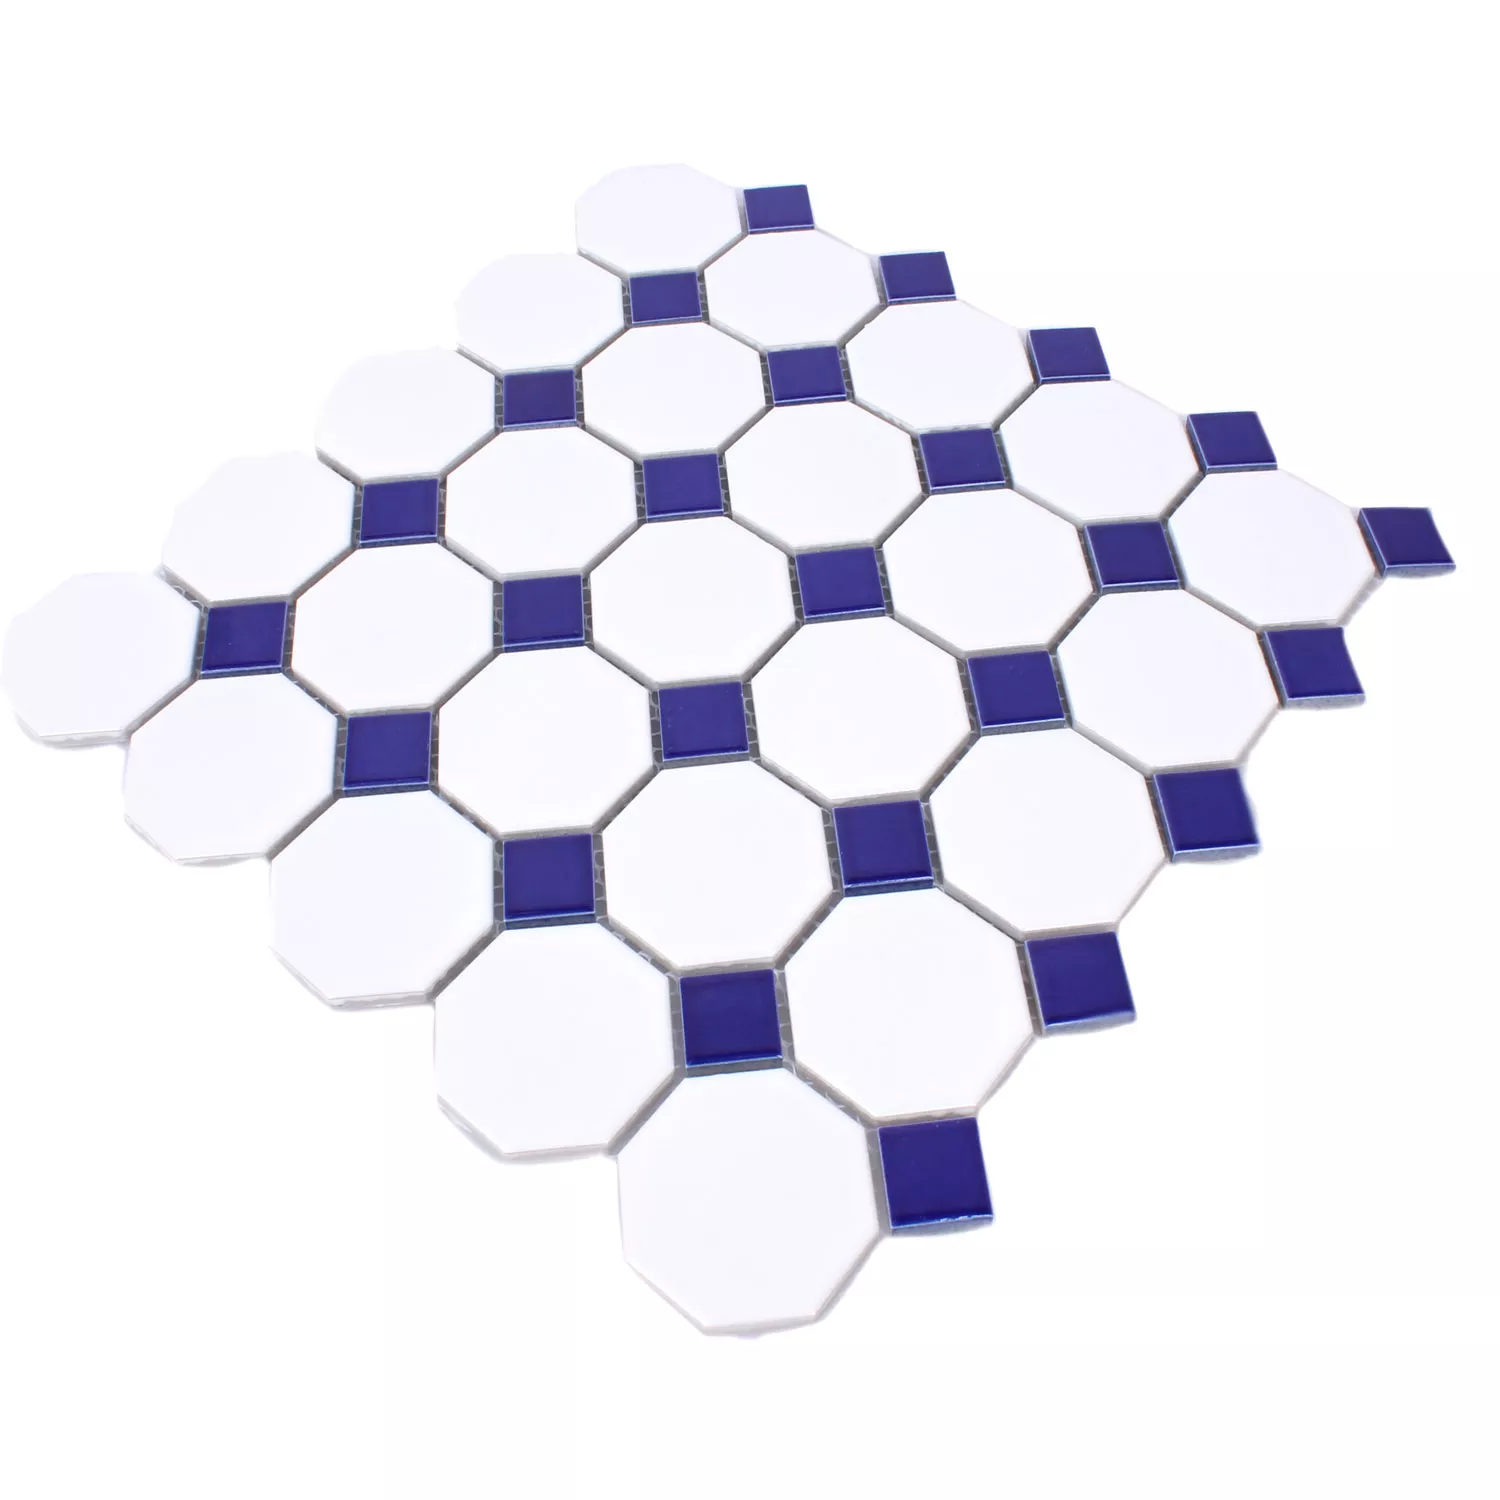 Mosaikfliesen Keramik Octagon Belami Weiss Blau